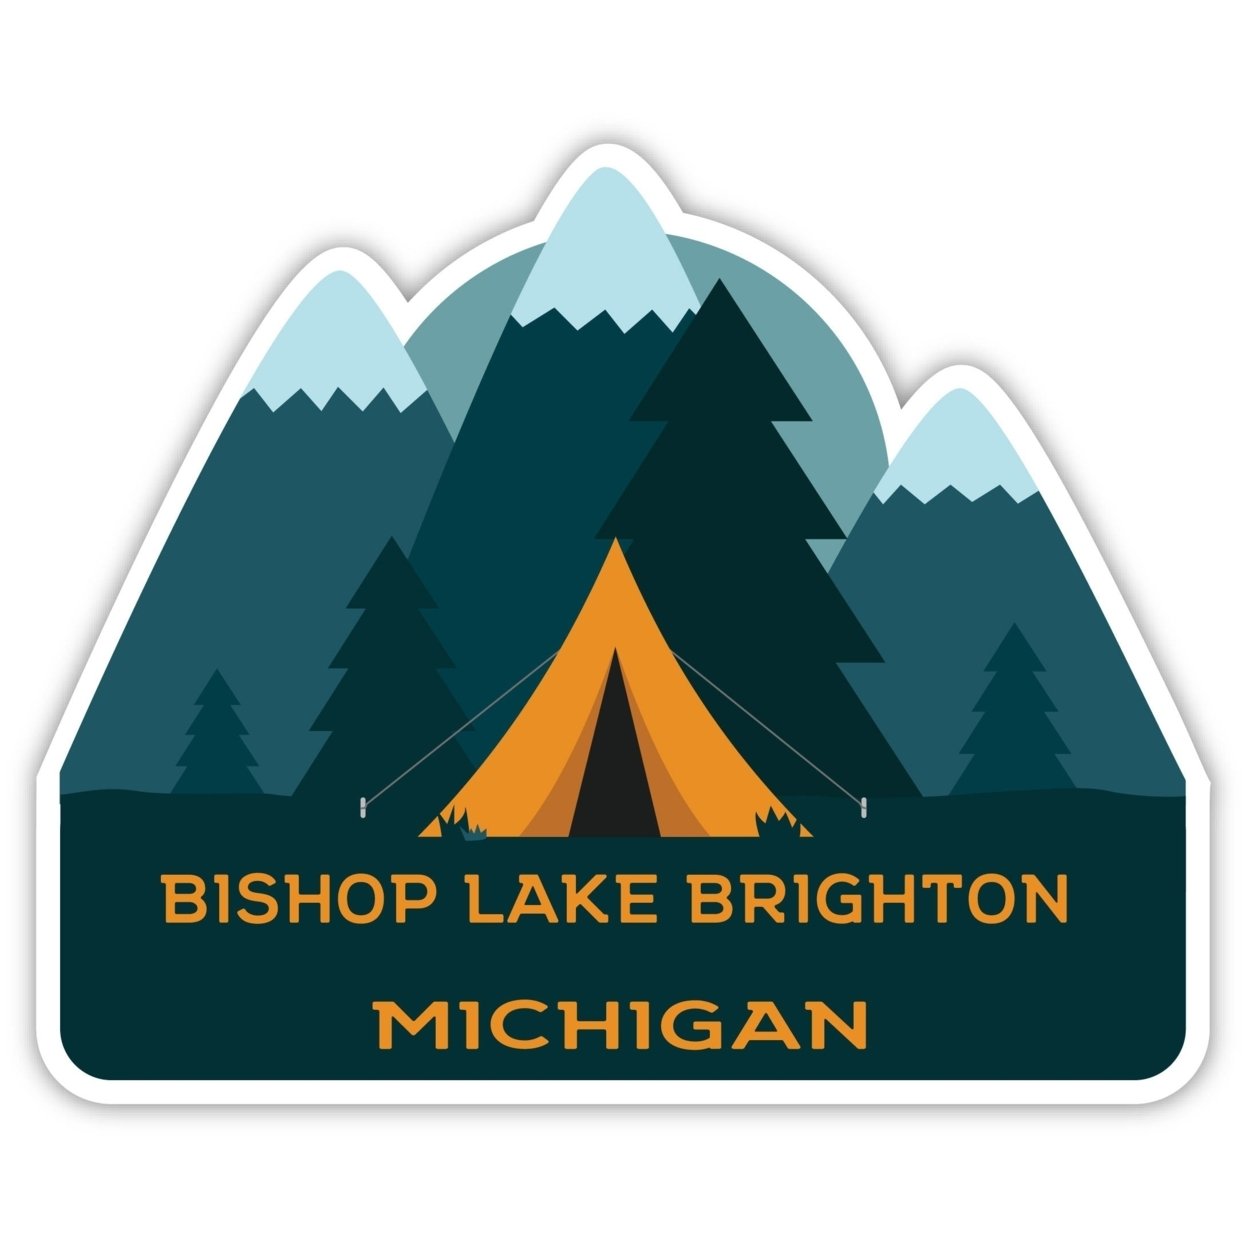 Bishop Lake Brighton Michigan Souvenir Decorative Stickers (Choose Theme And Size) - 4-Pack, 4-Inch, Tent